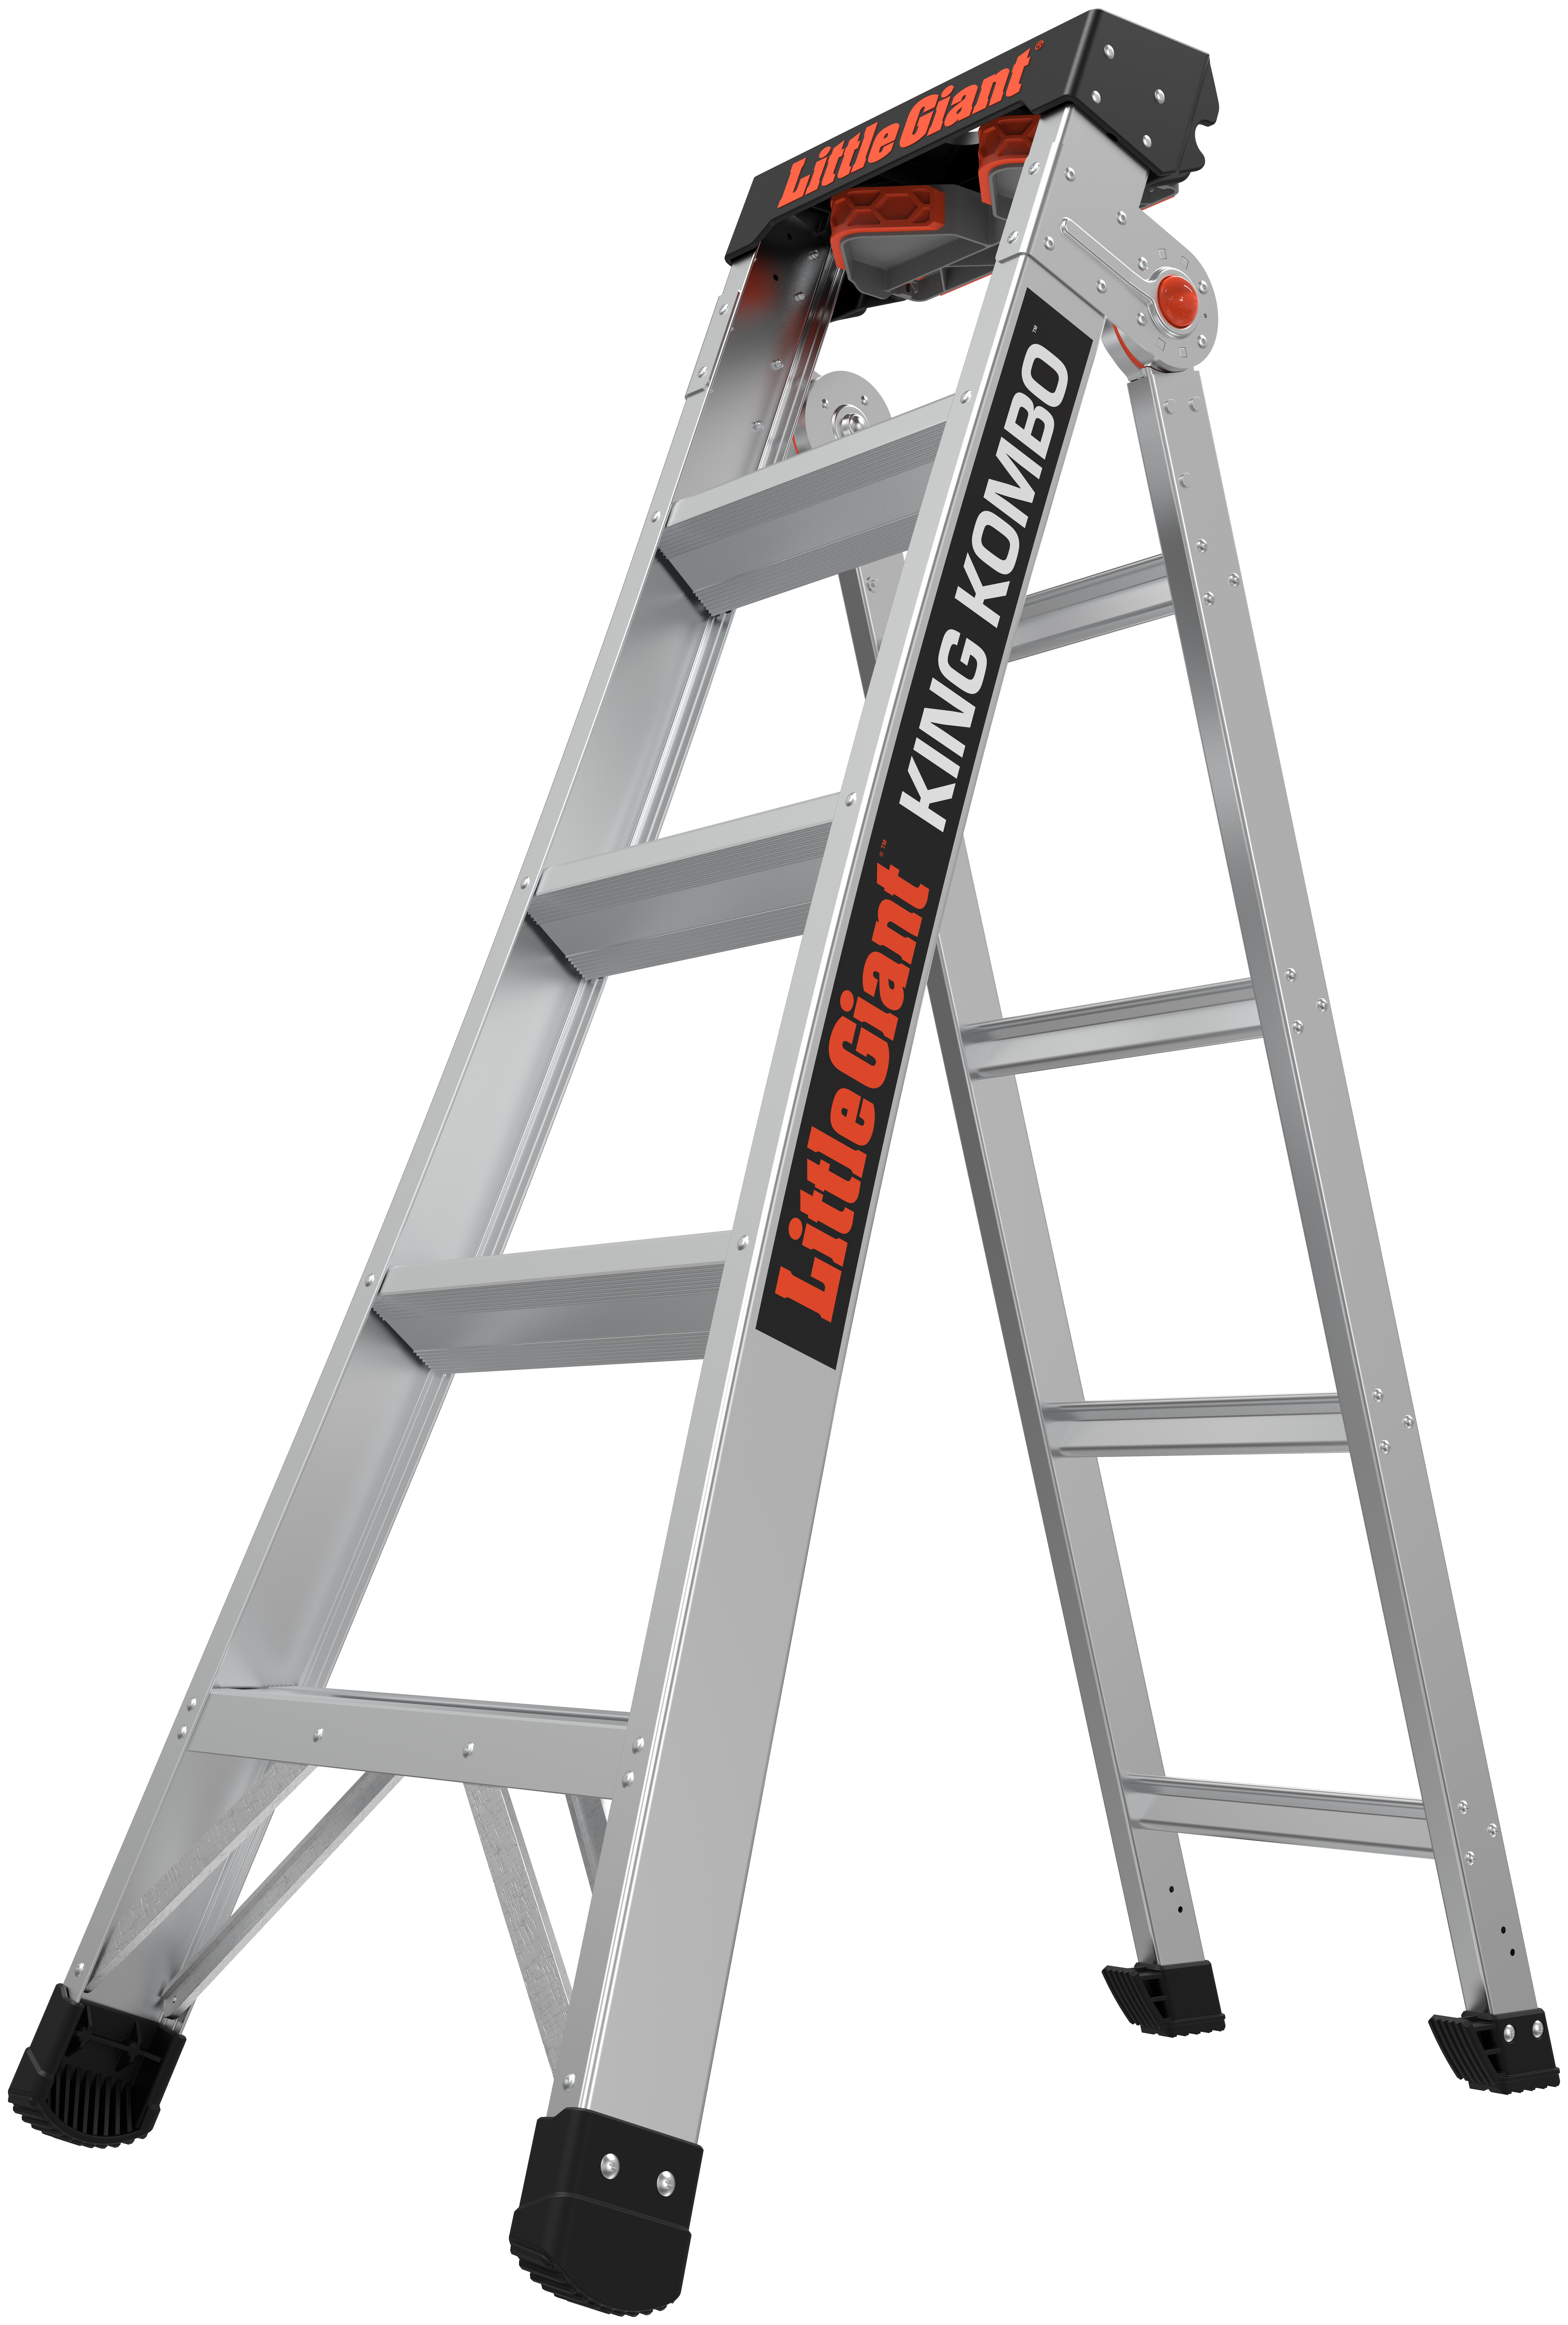 Little Giant 5 Tread King Kombo Professional Aluminium Extension Ladder